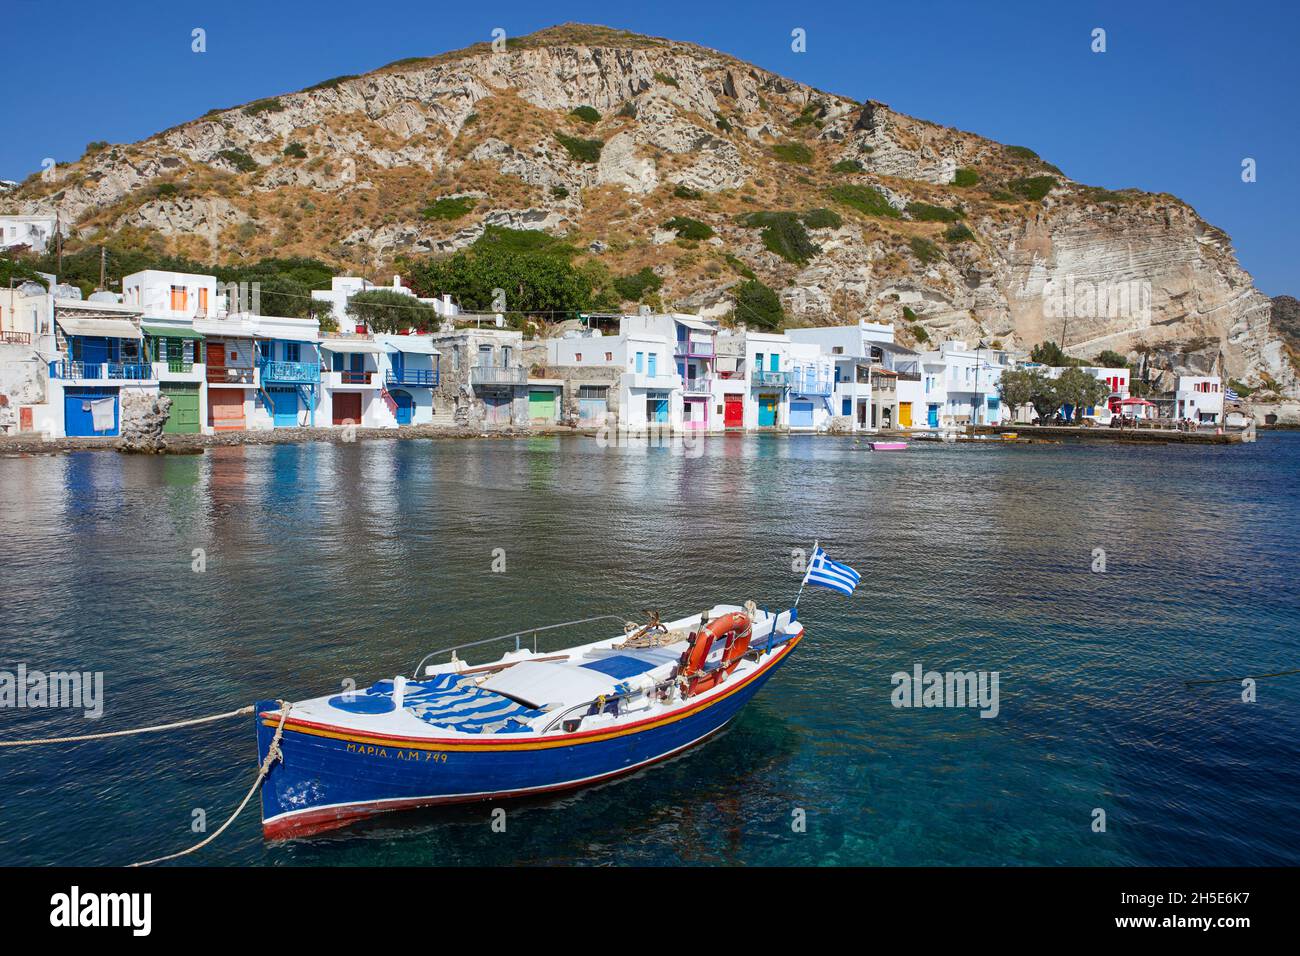 The colorful Klima village, Milos island, Greece Stock Photo